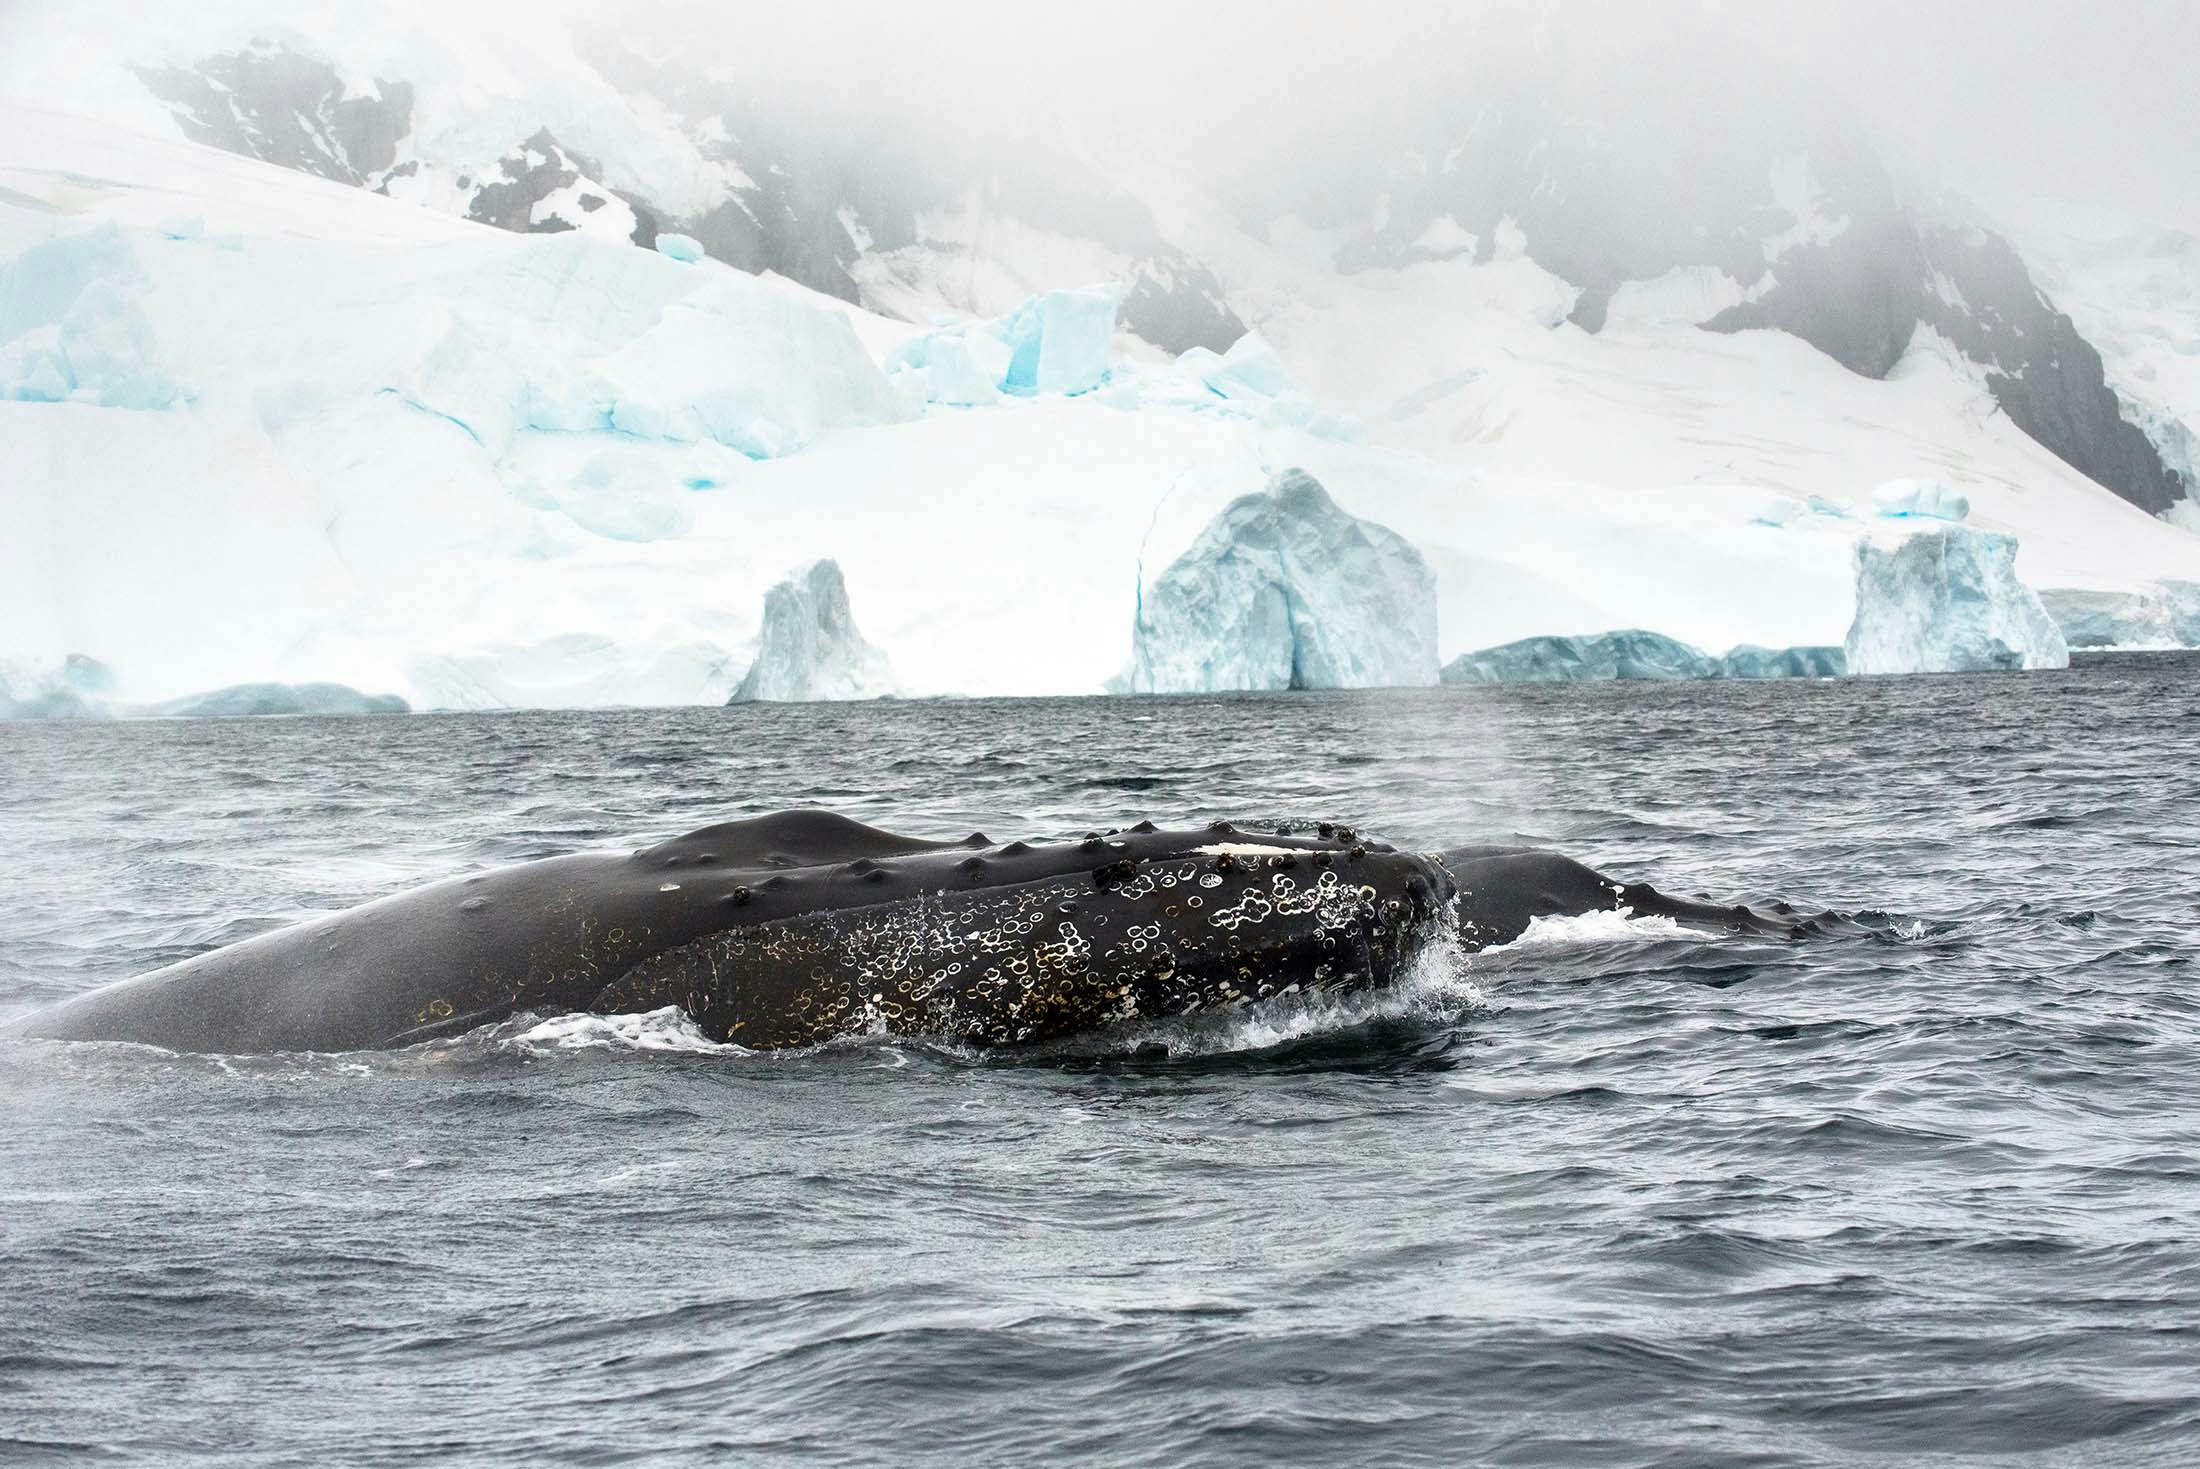 Spotting humpback whales in Antarctica